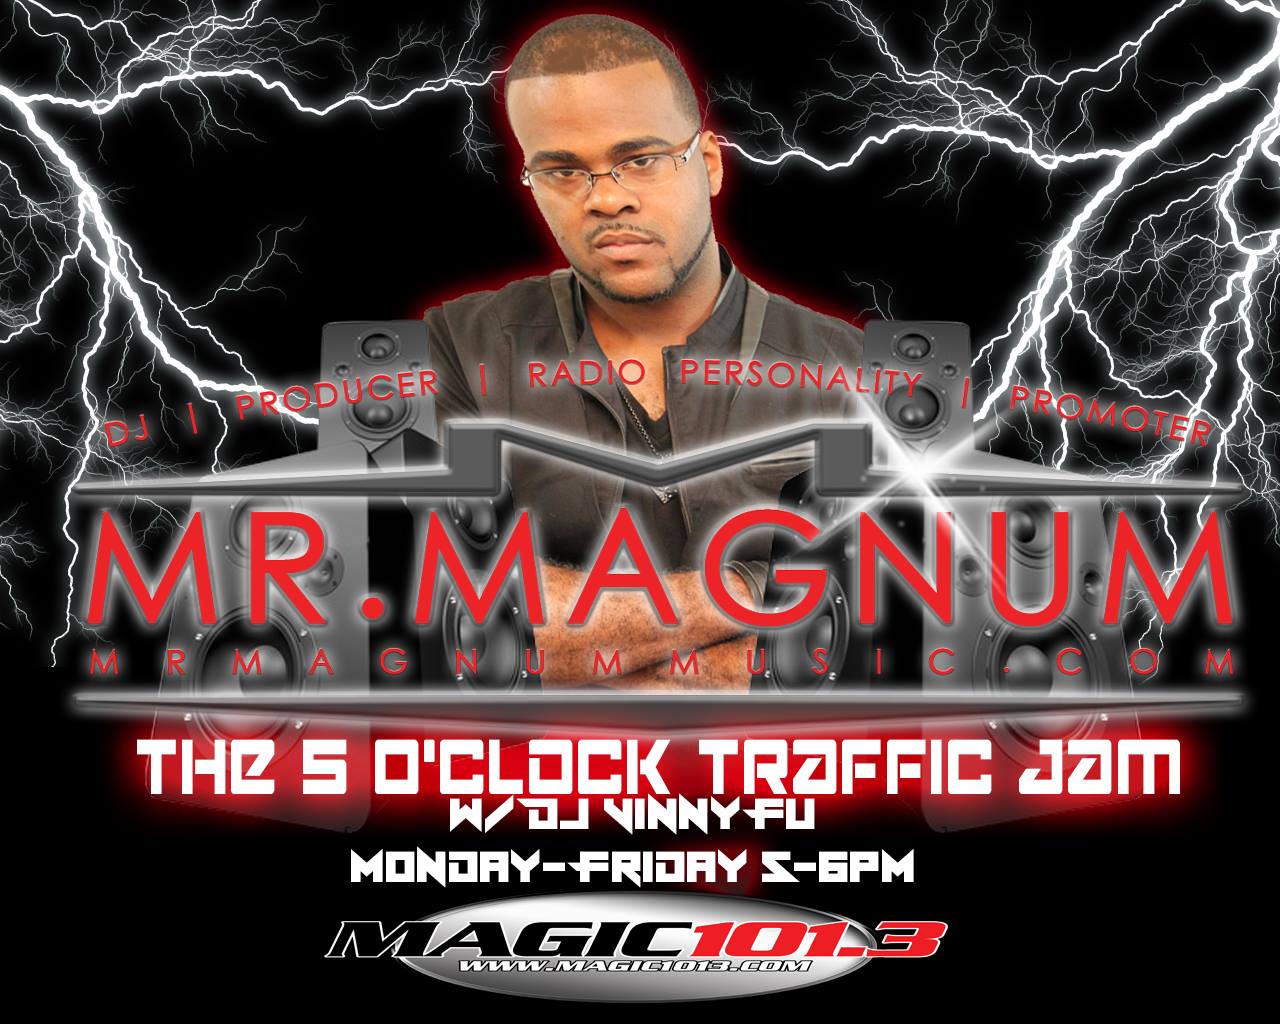 The 5 O’Clock Traffic Jam 2-8-2017 on Magic 101.3